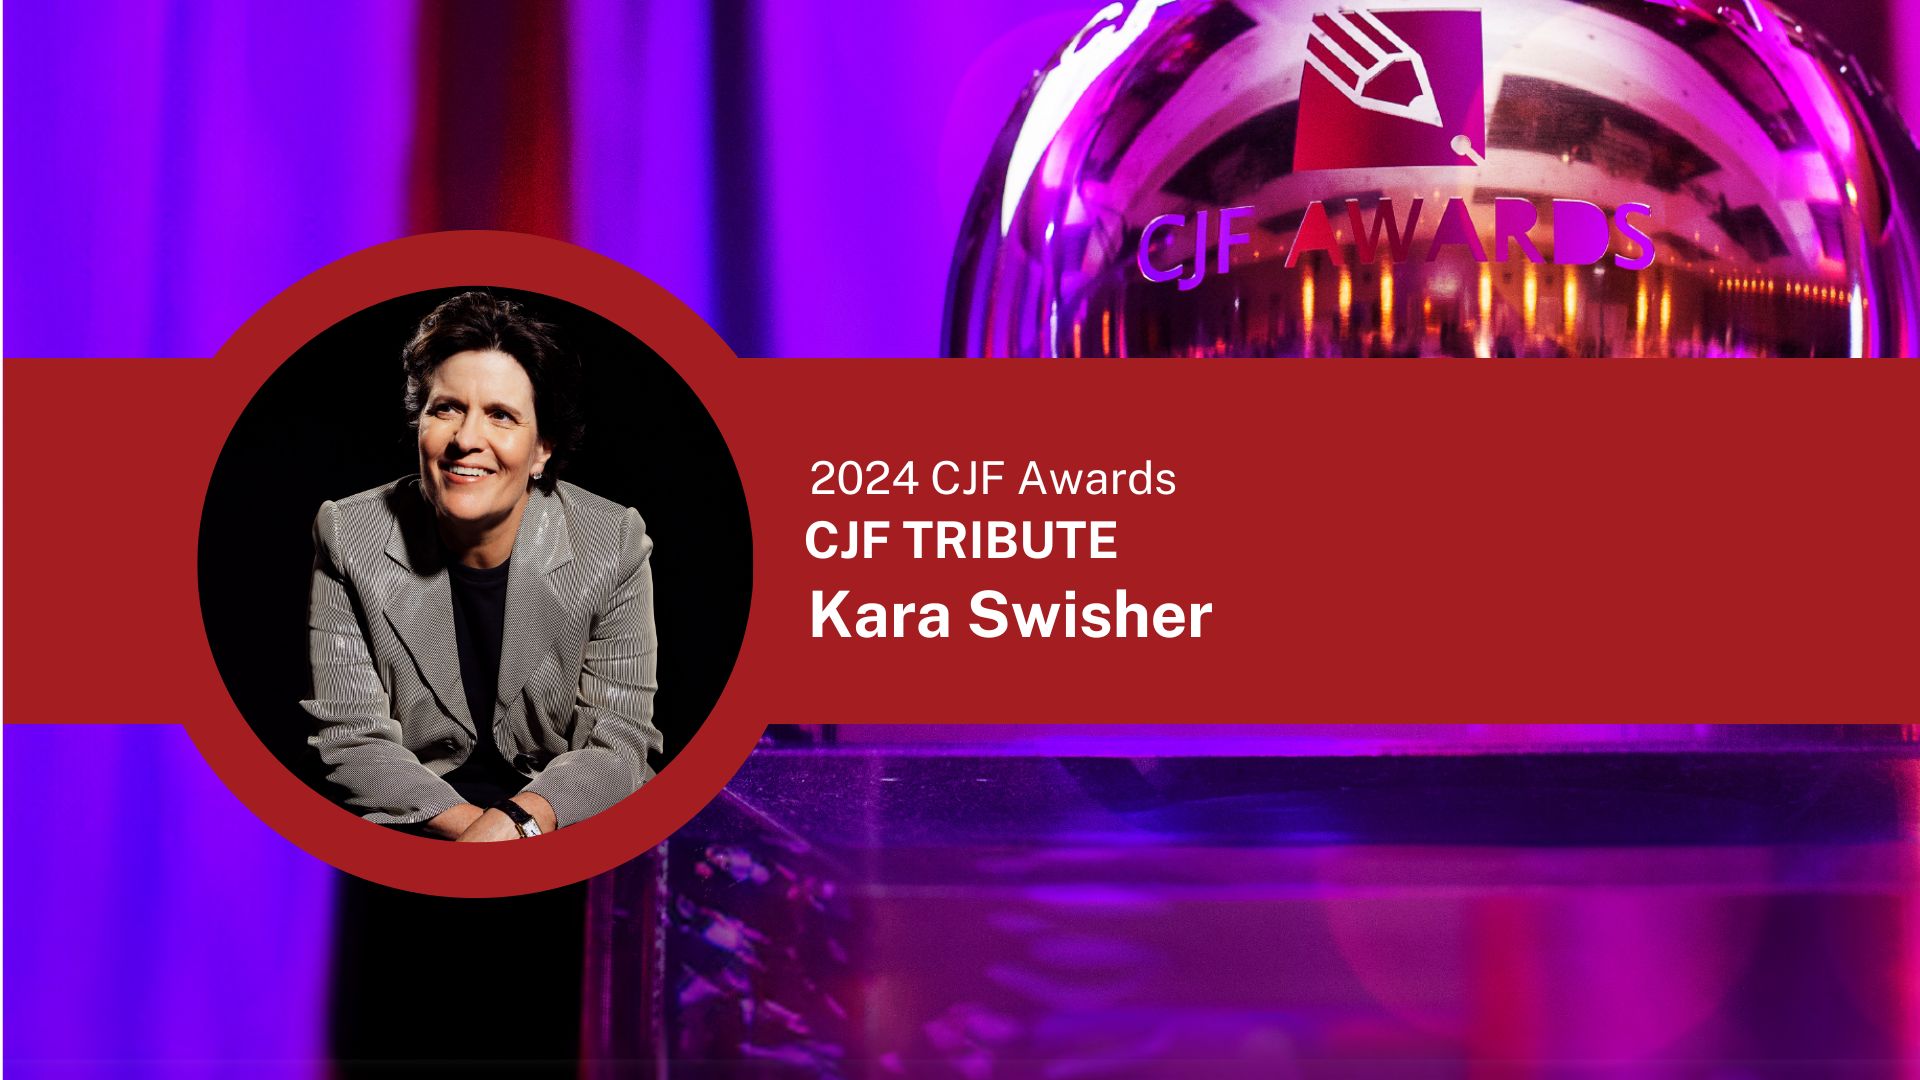 2024 CJF Awards CJF Tribute Kara Swisher